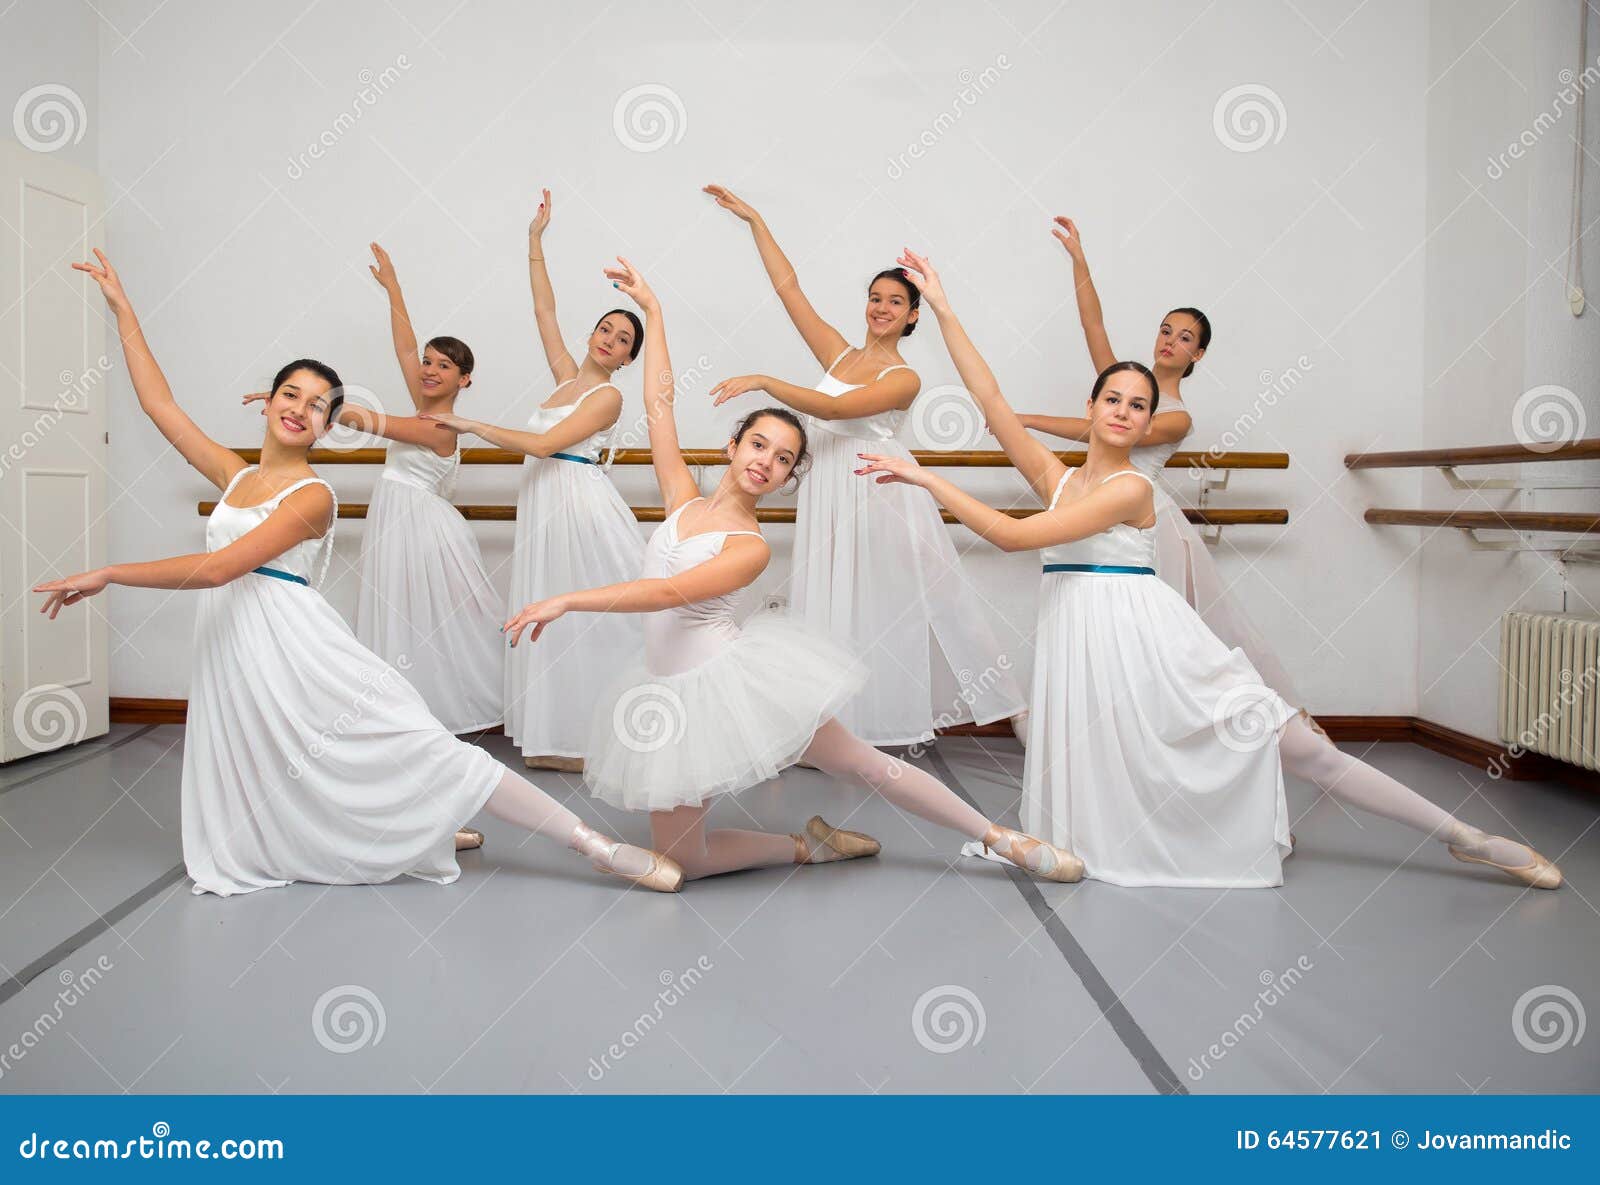 ballerina dancers pose for recital photo